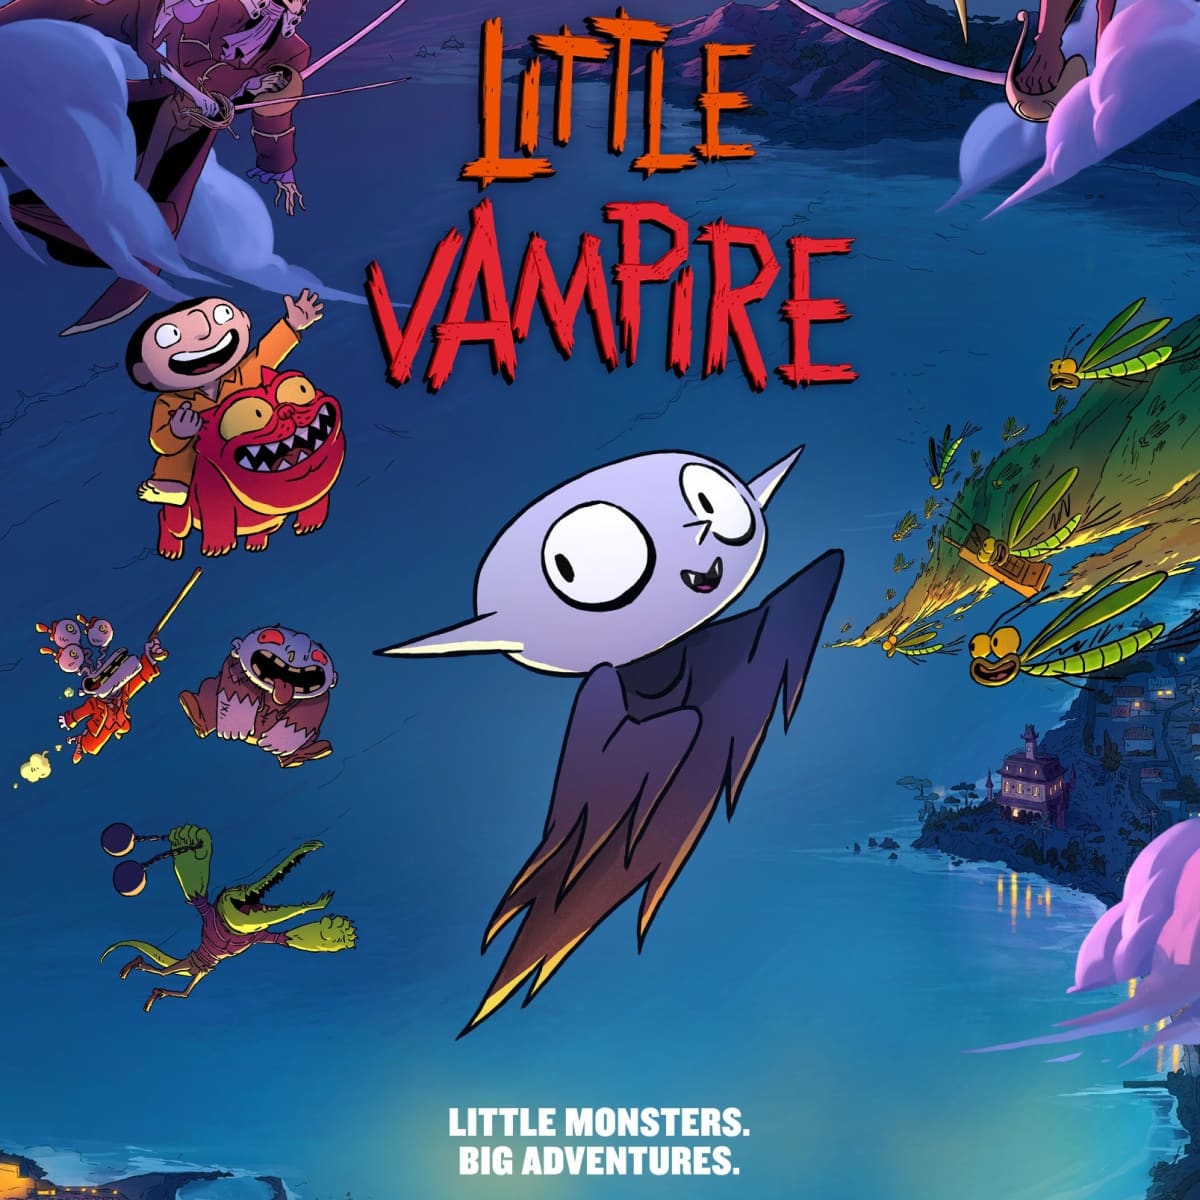 The Little Vampire 3D (2017) - IMDb